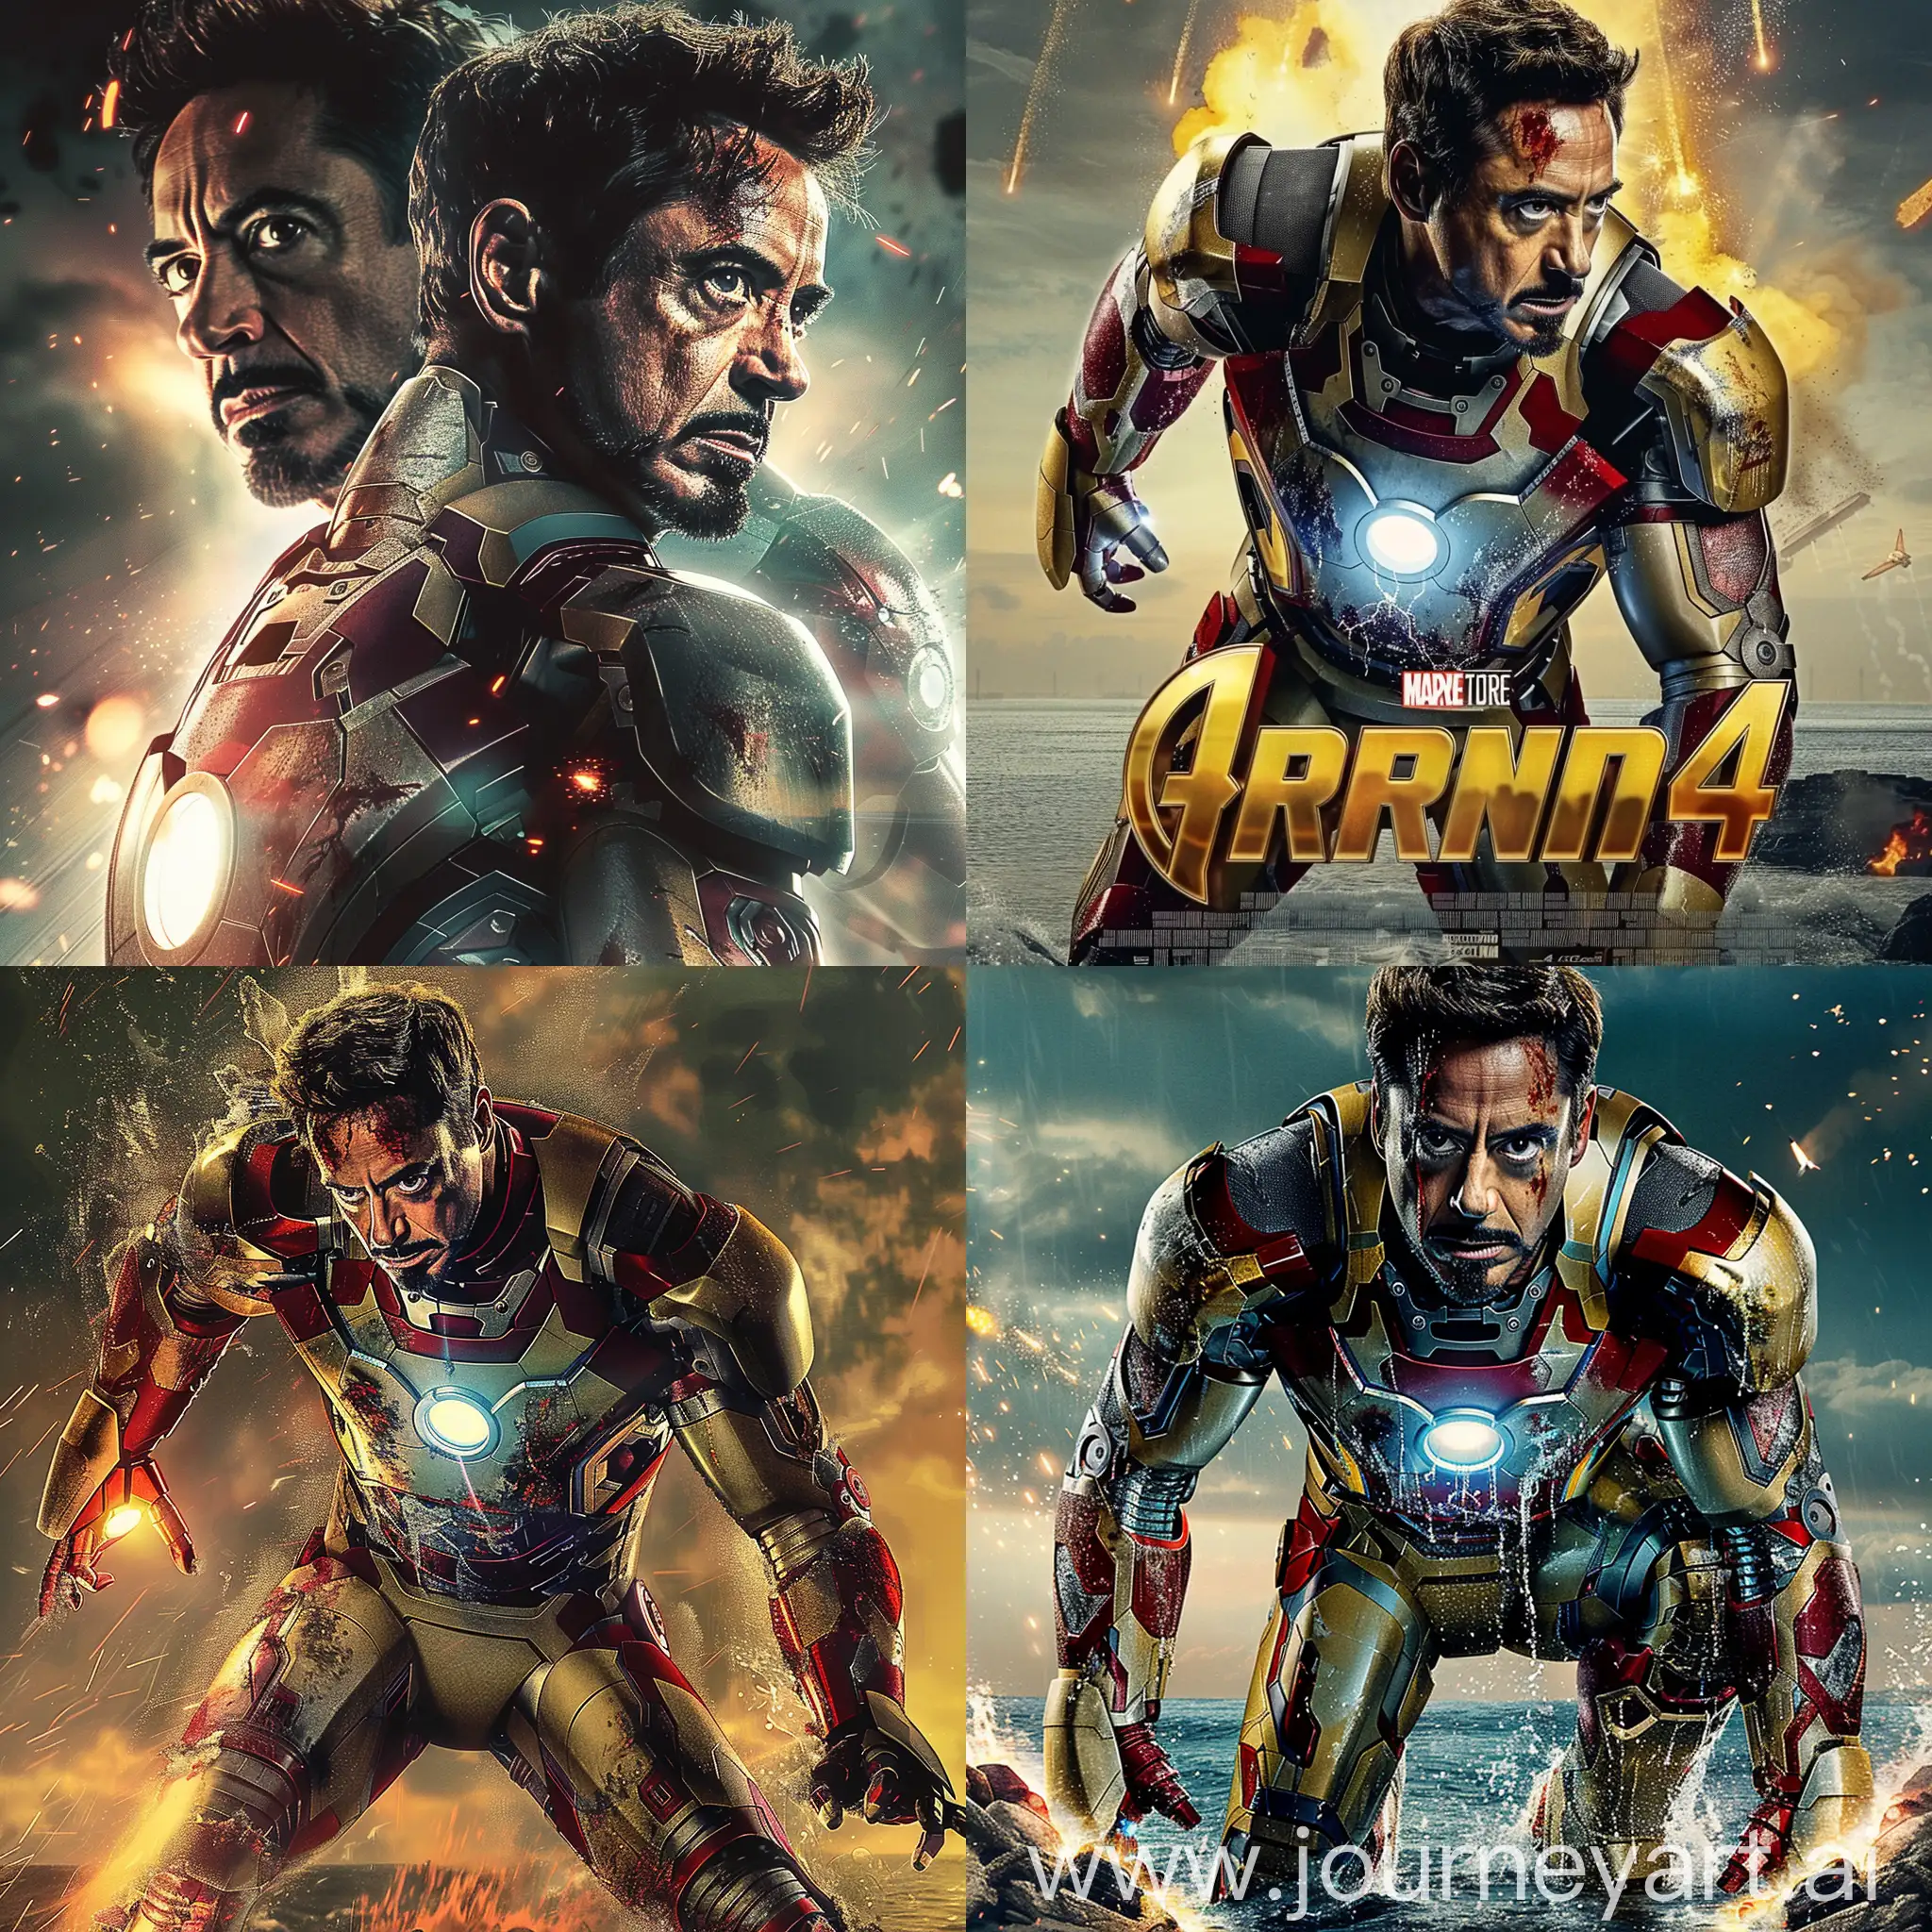 Iron man 4 movie poster 